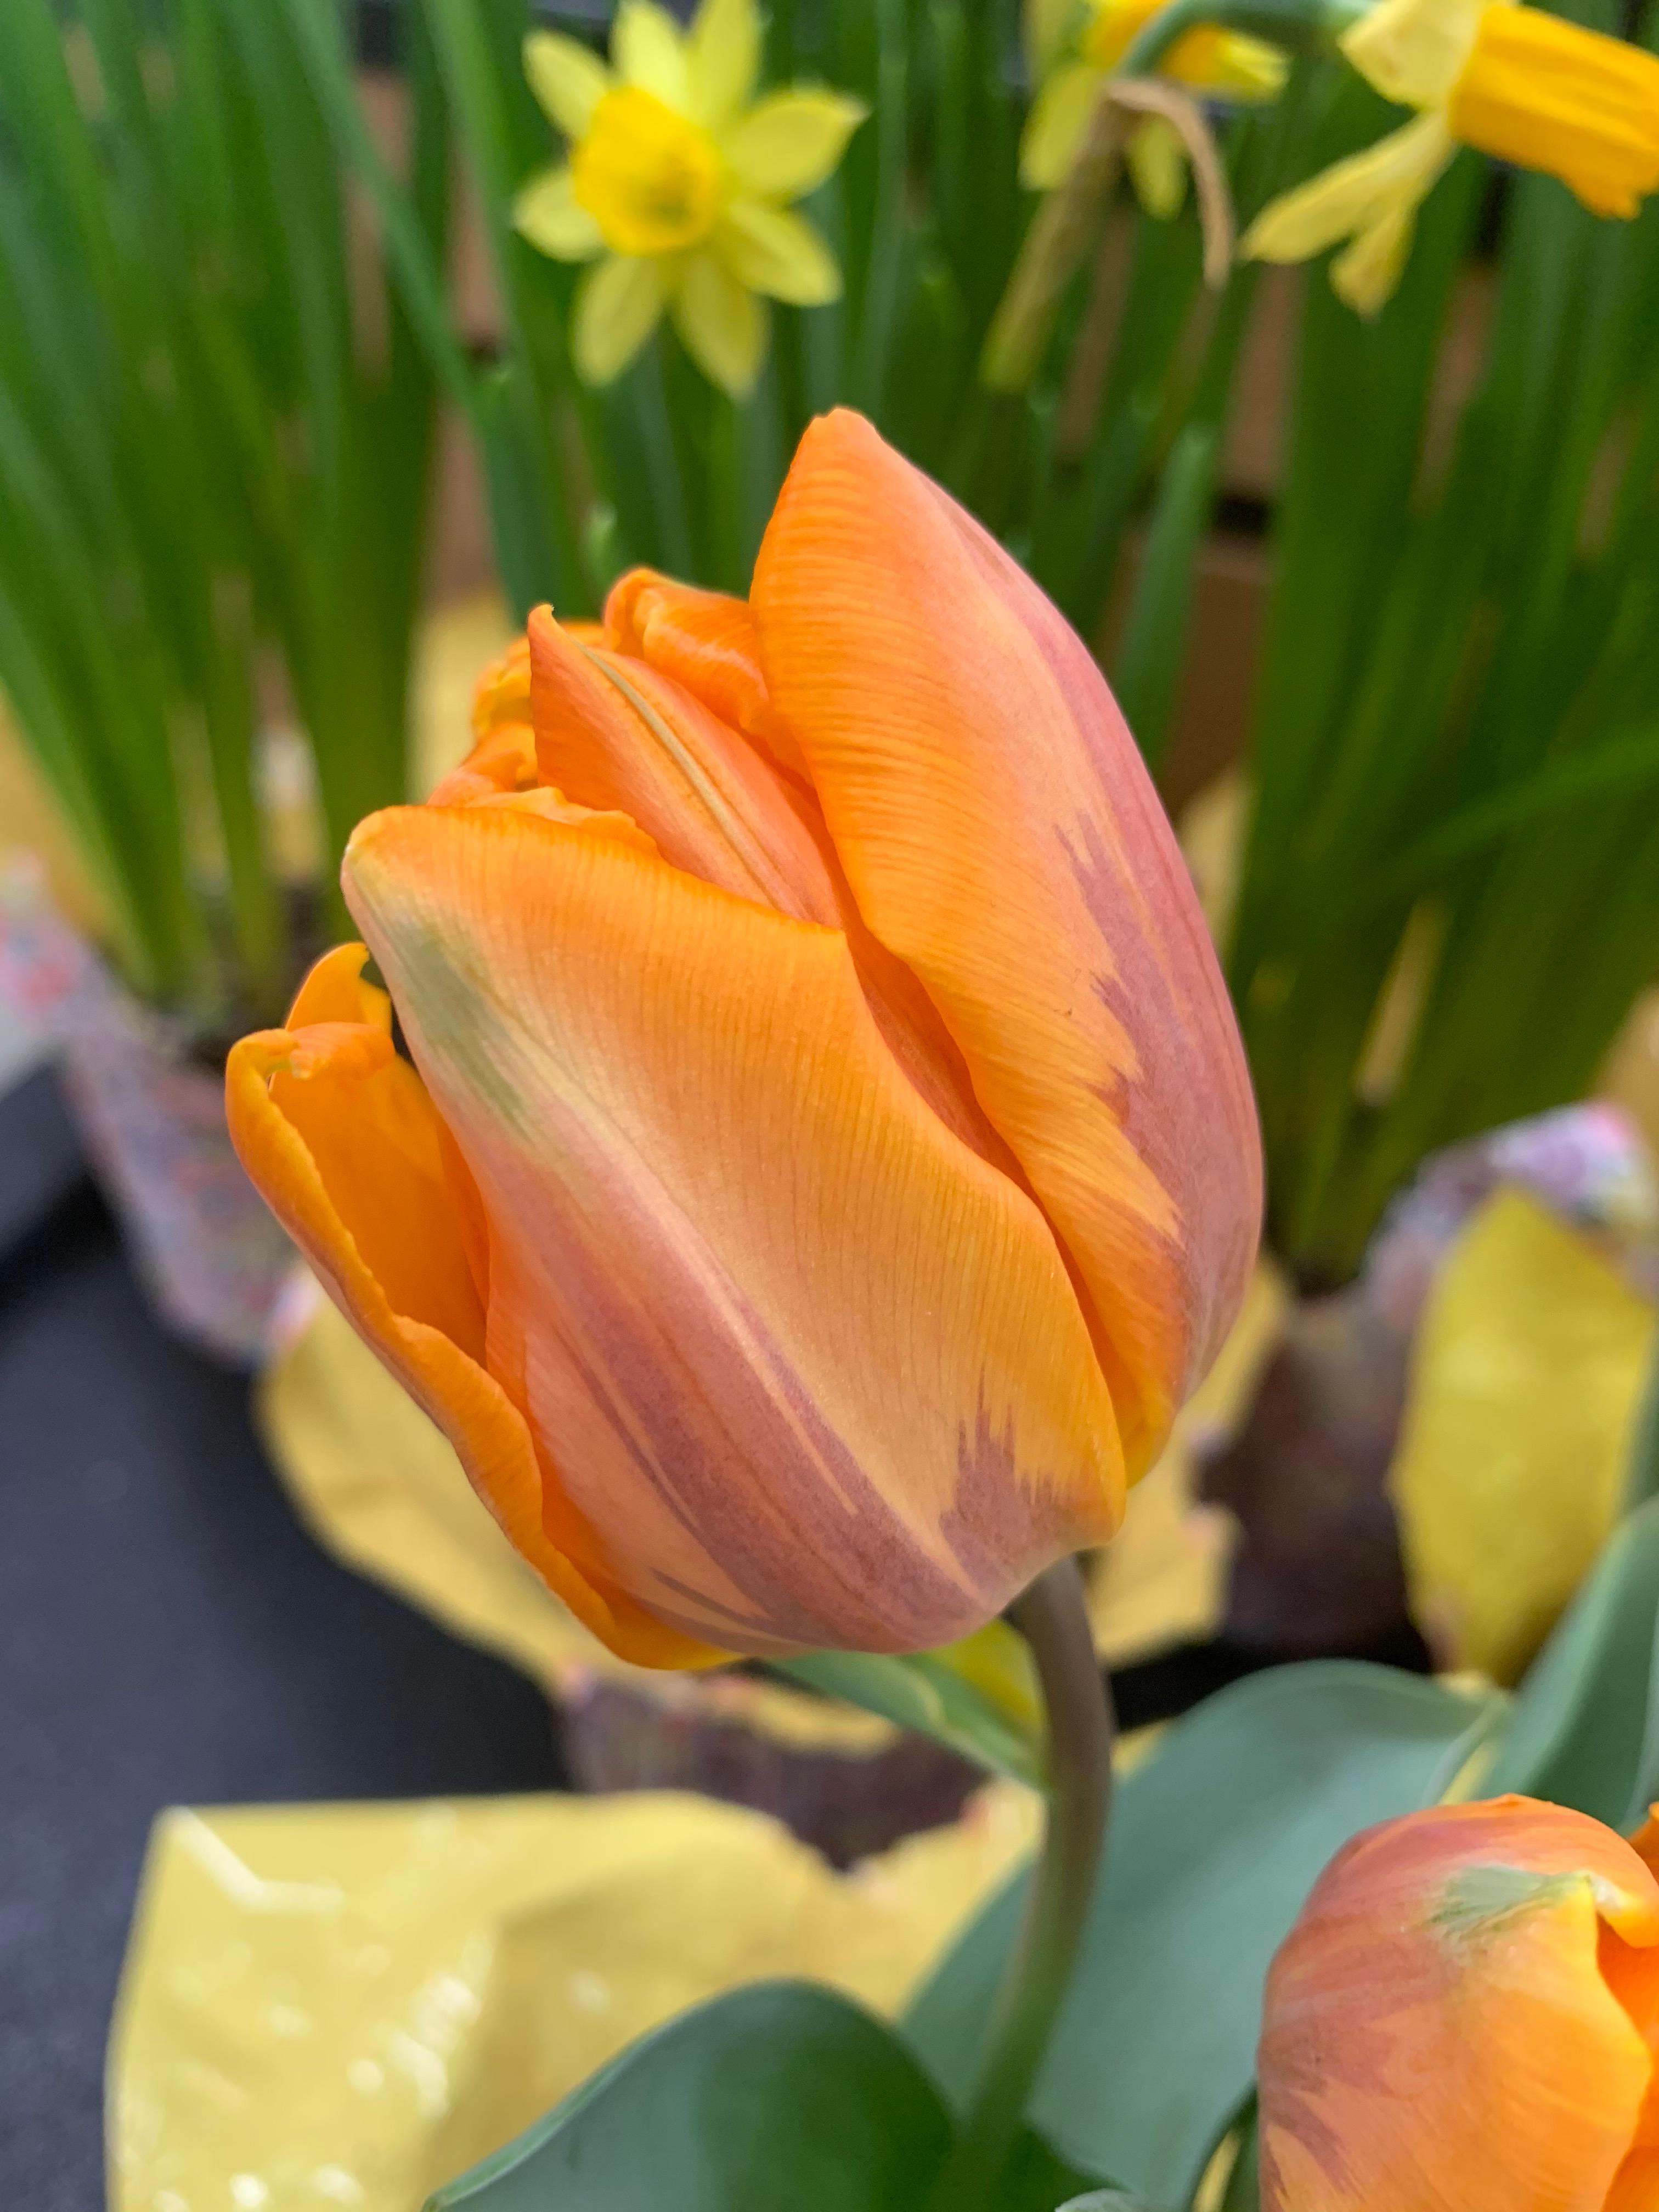 Tulip Triumph 'Princess Irene' - Tulip from Leo Berbee Bulb Company